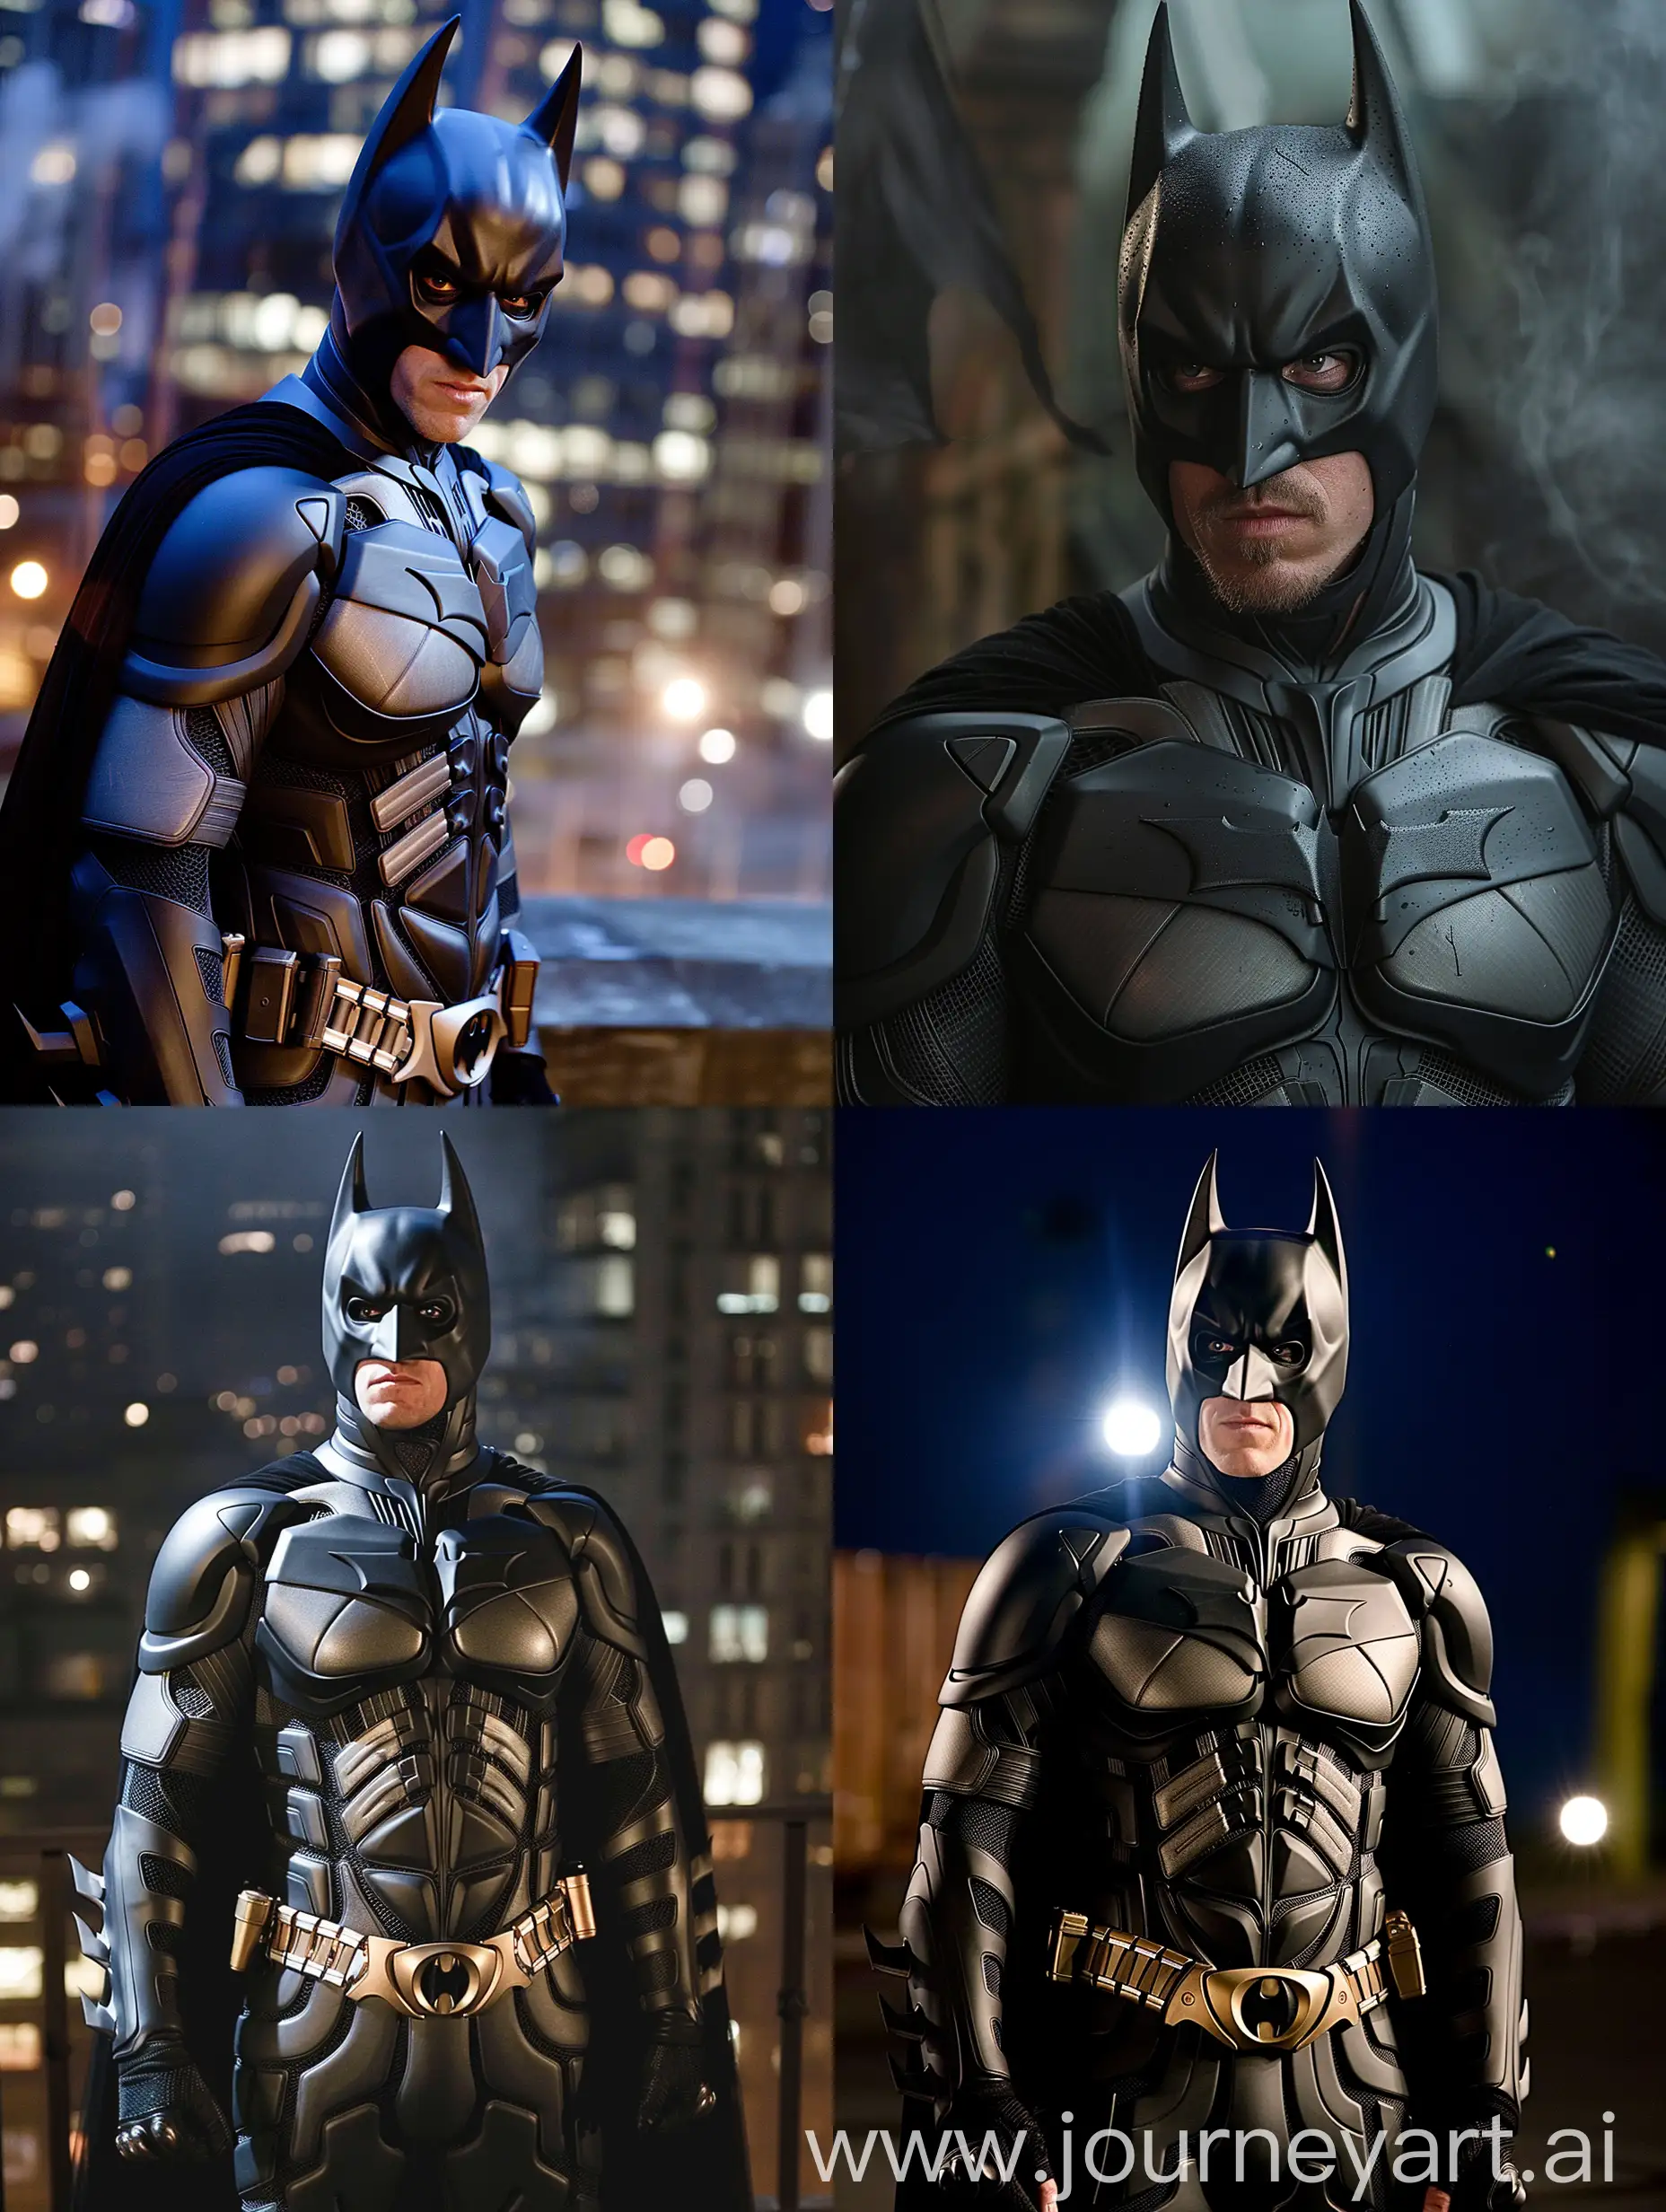 Christian-Bale-in-2012-Batman-Film-Dark-Knight-Rises